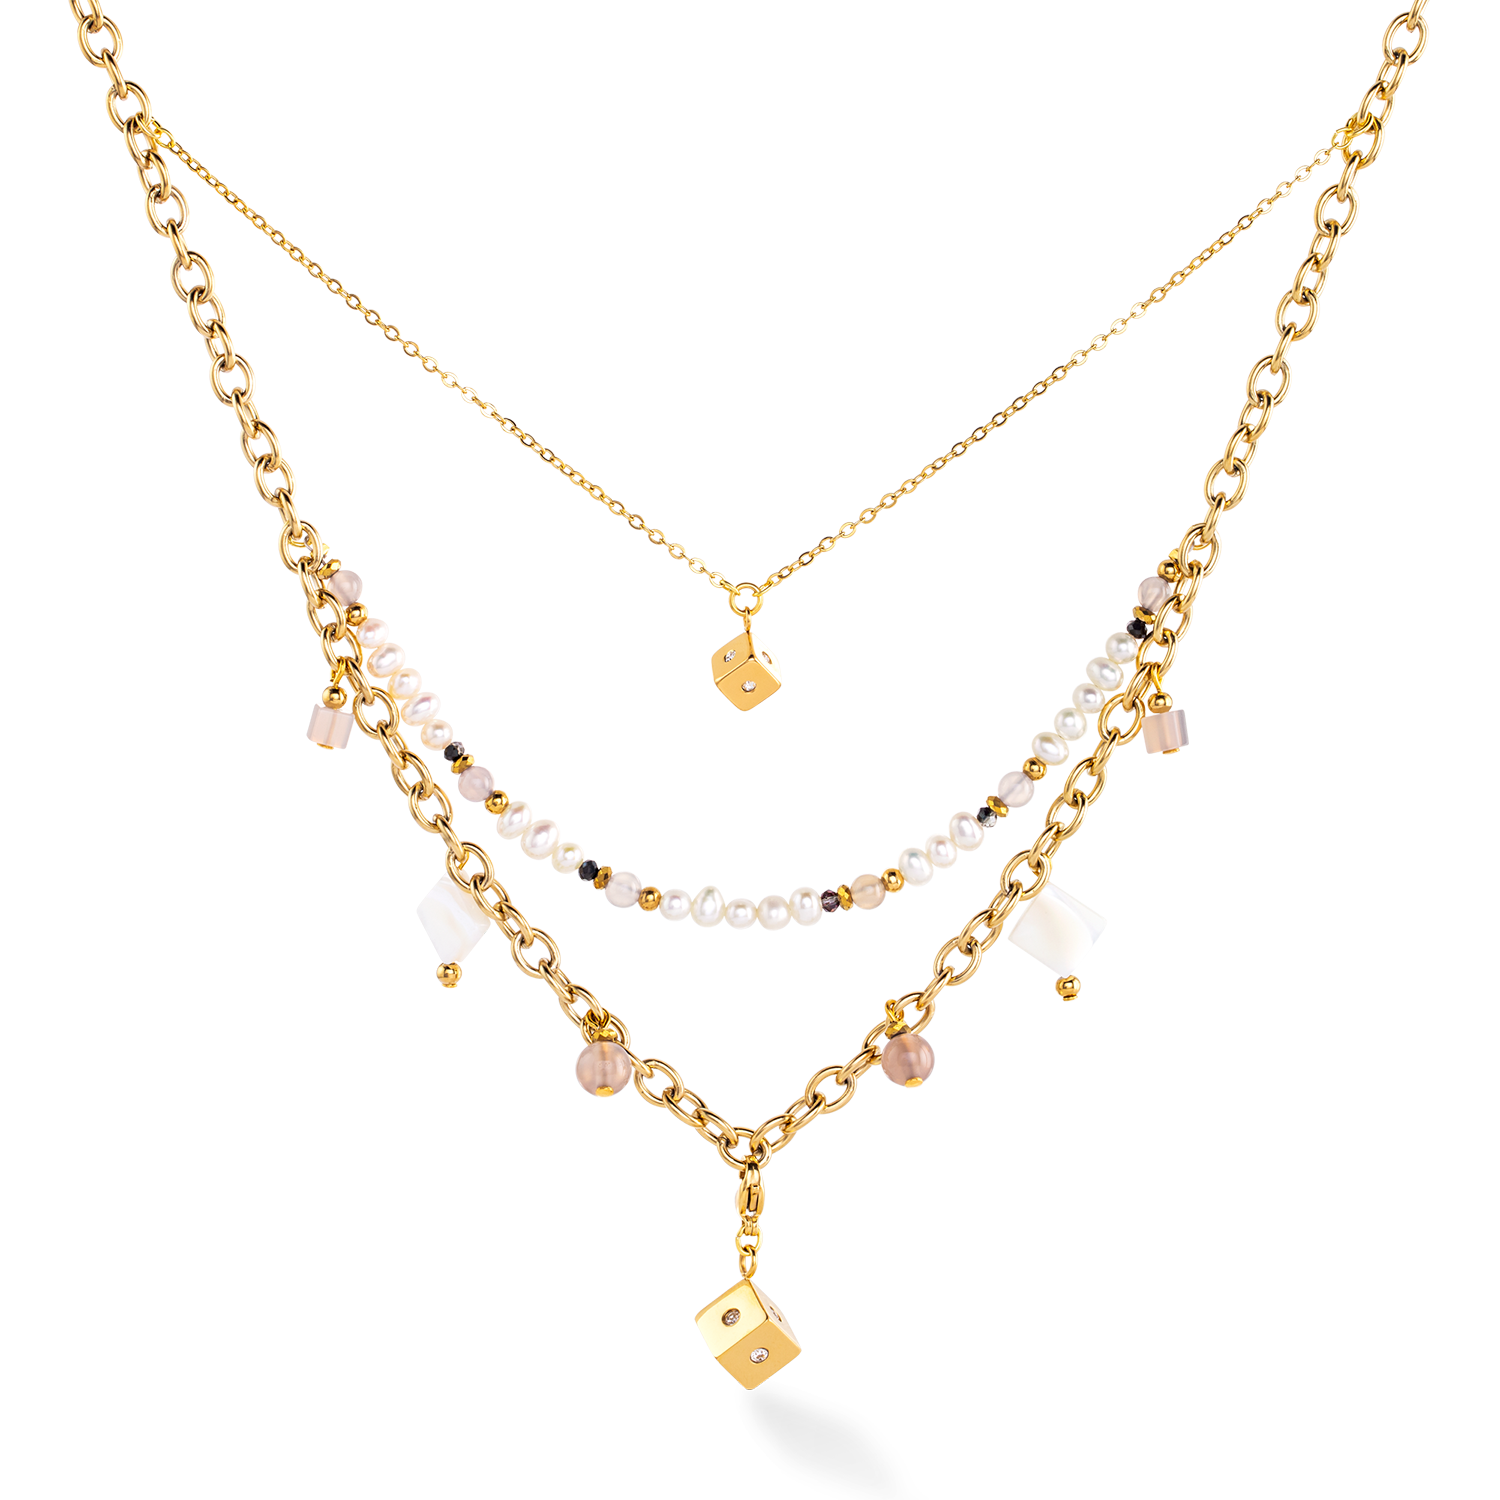 Boho necklace freshwater pearls gold & white